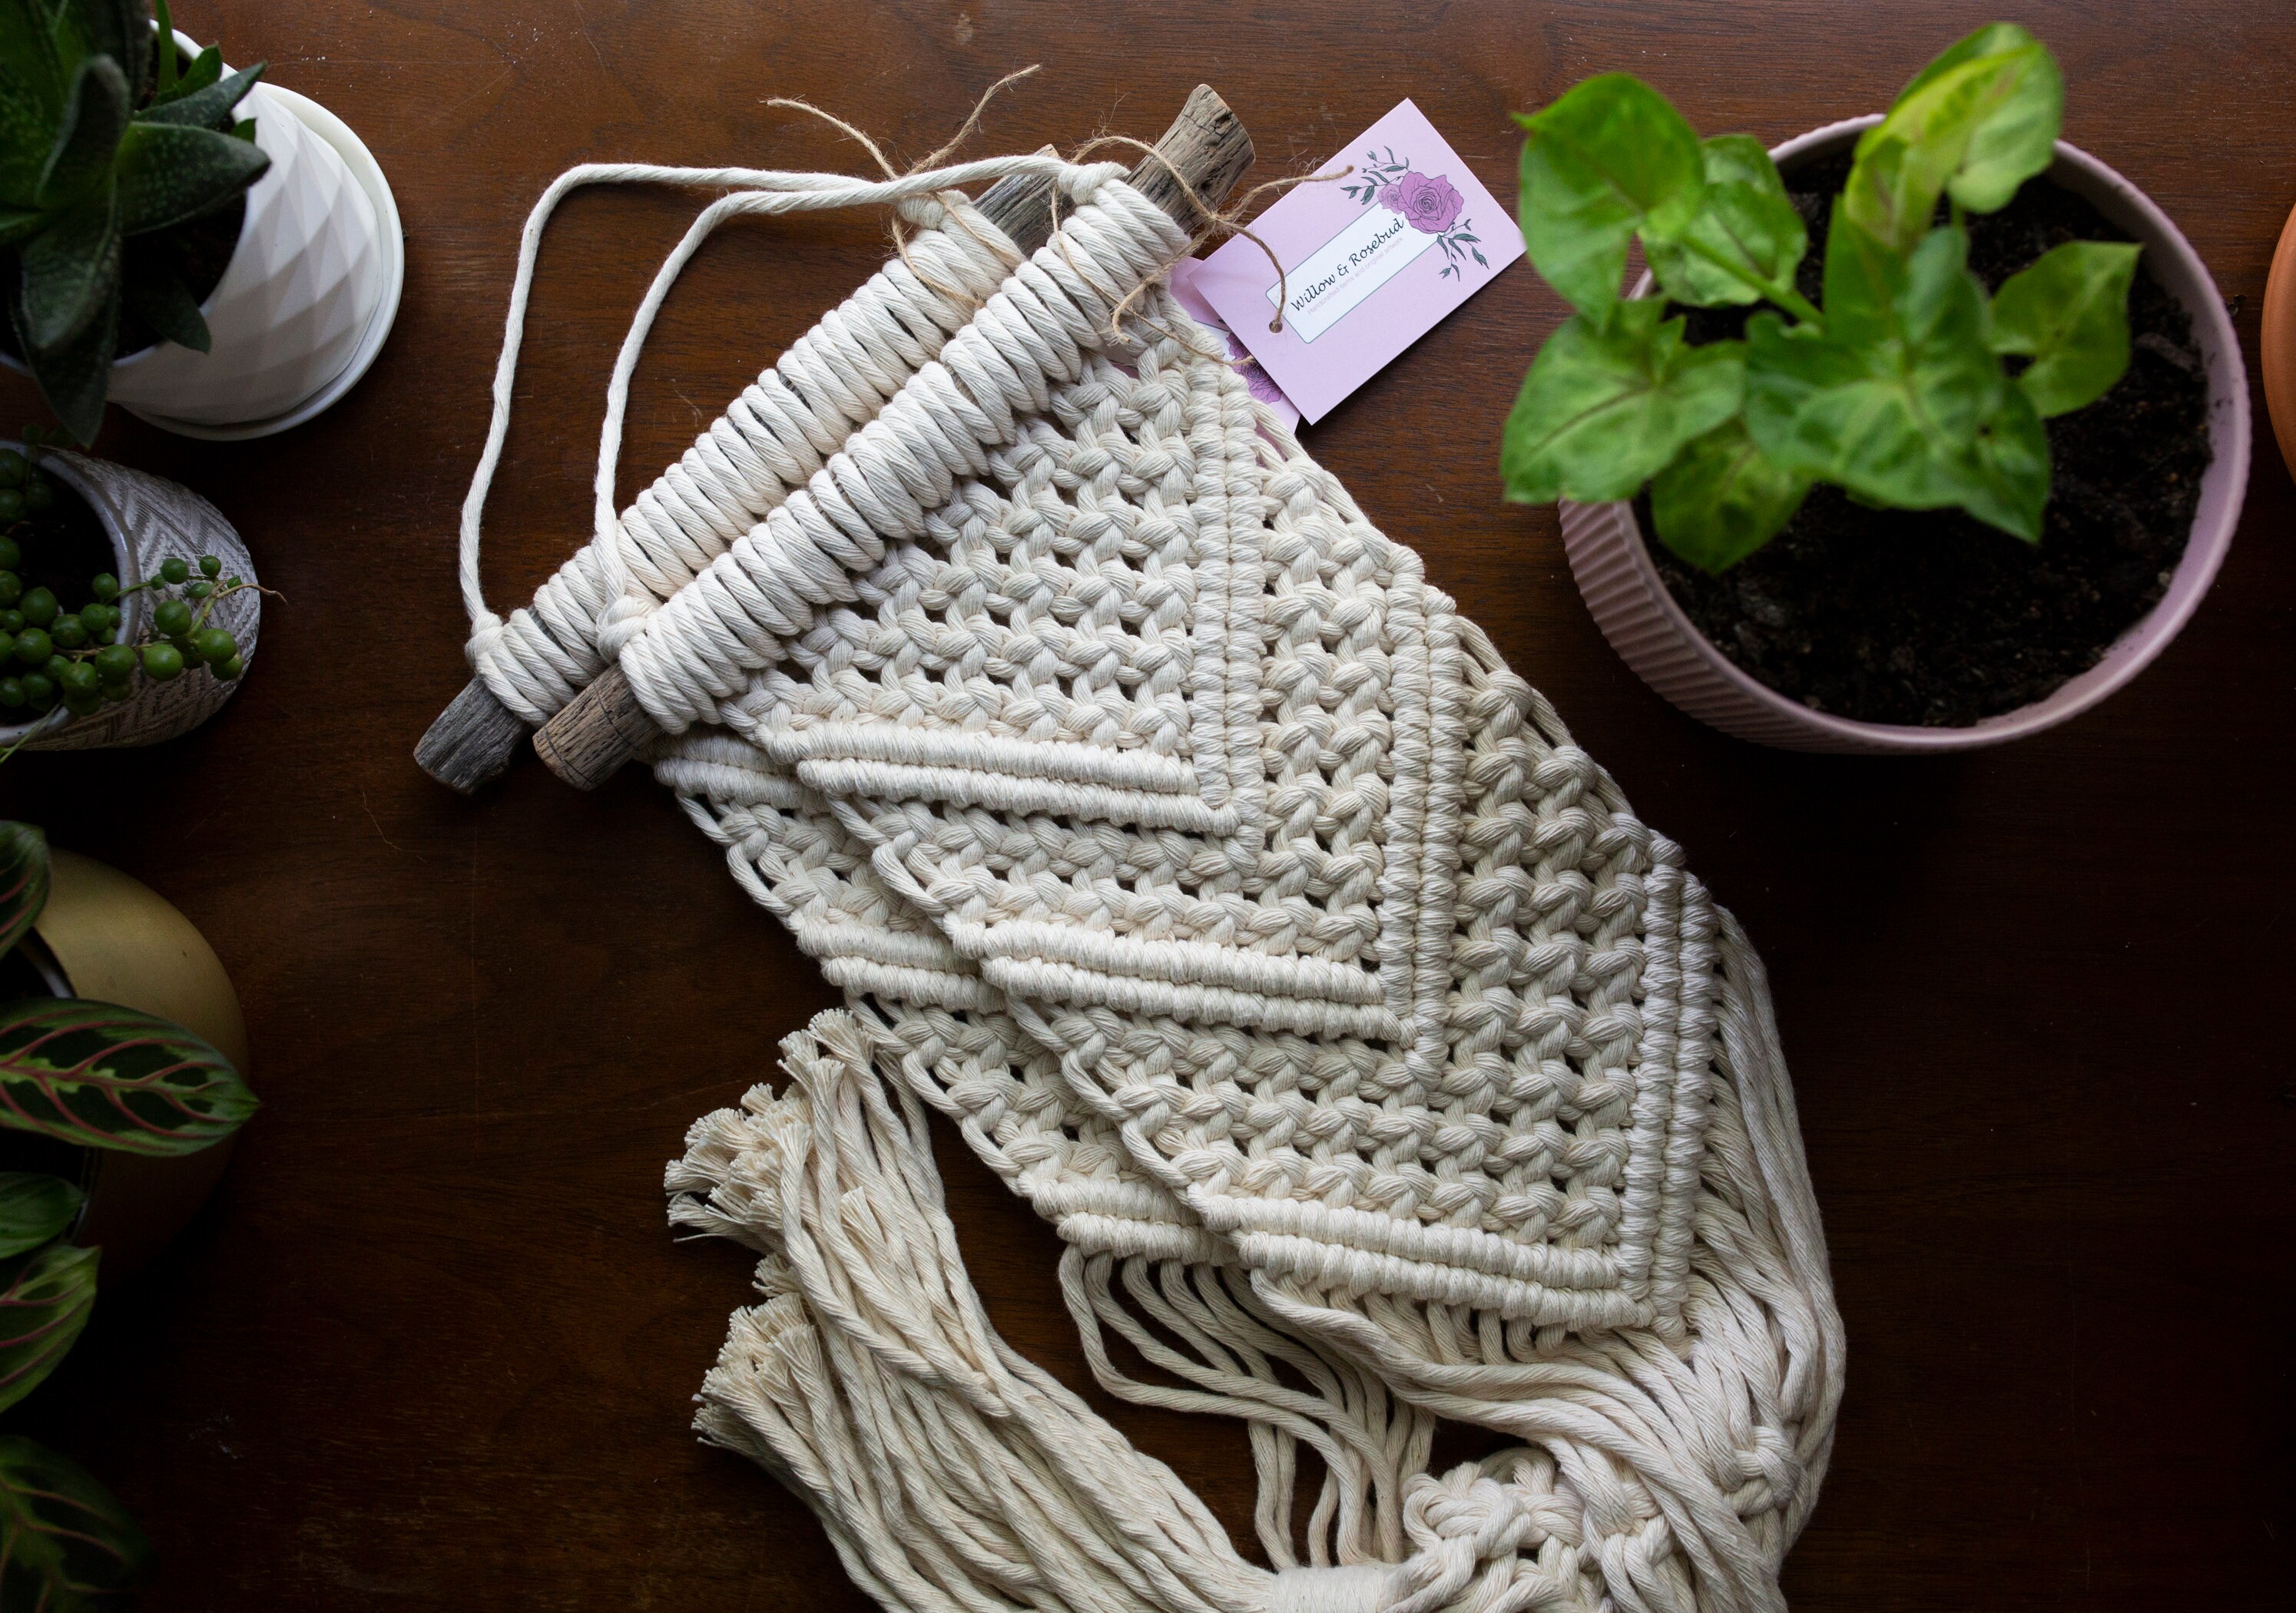 Beginner Macrame Plant Hanger Kits - Baaad Anna's Yarn Store